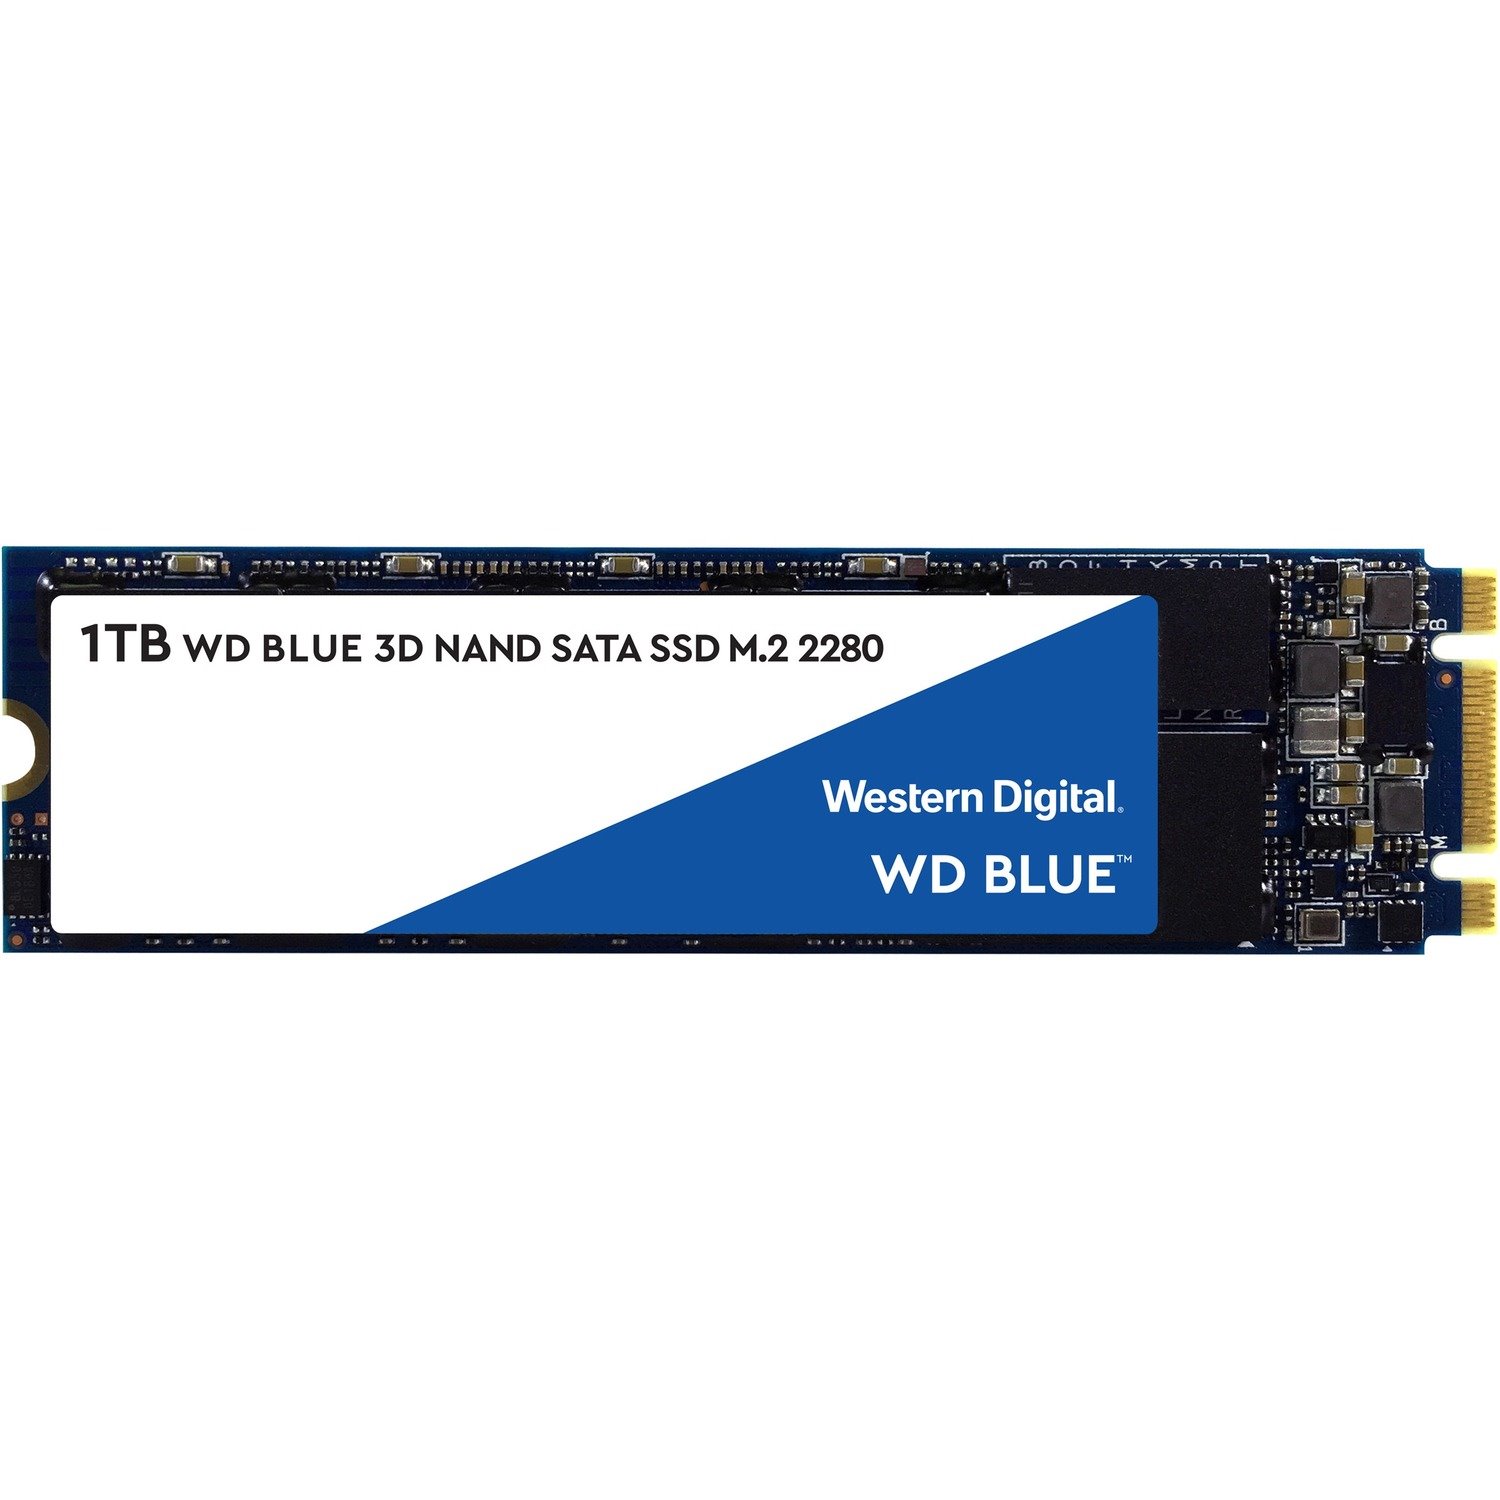 WD Blue 3D NAND 1TB PC SSD - SATA III 6 Gb/s M.2 2280 Solid State Drive